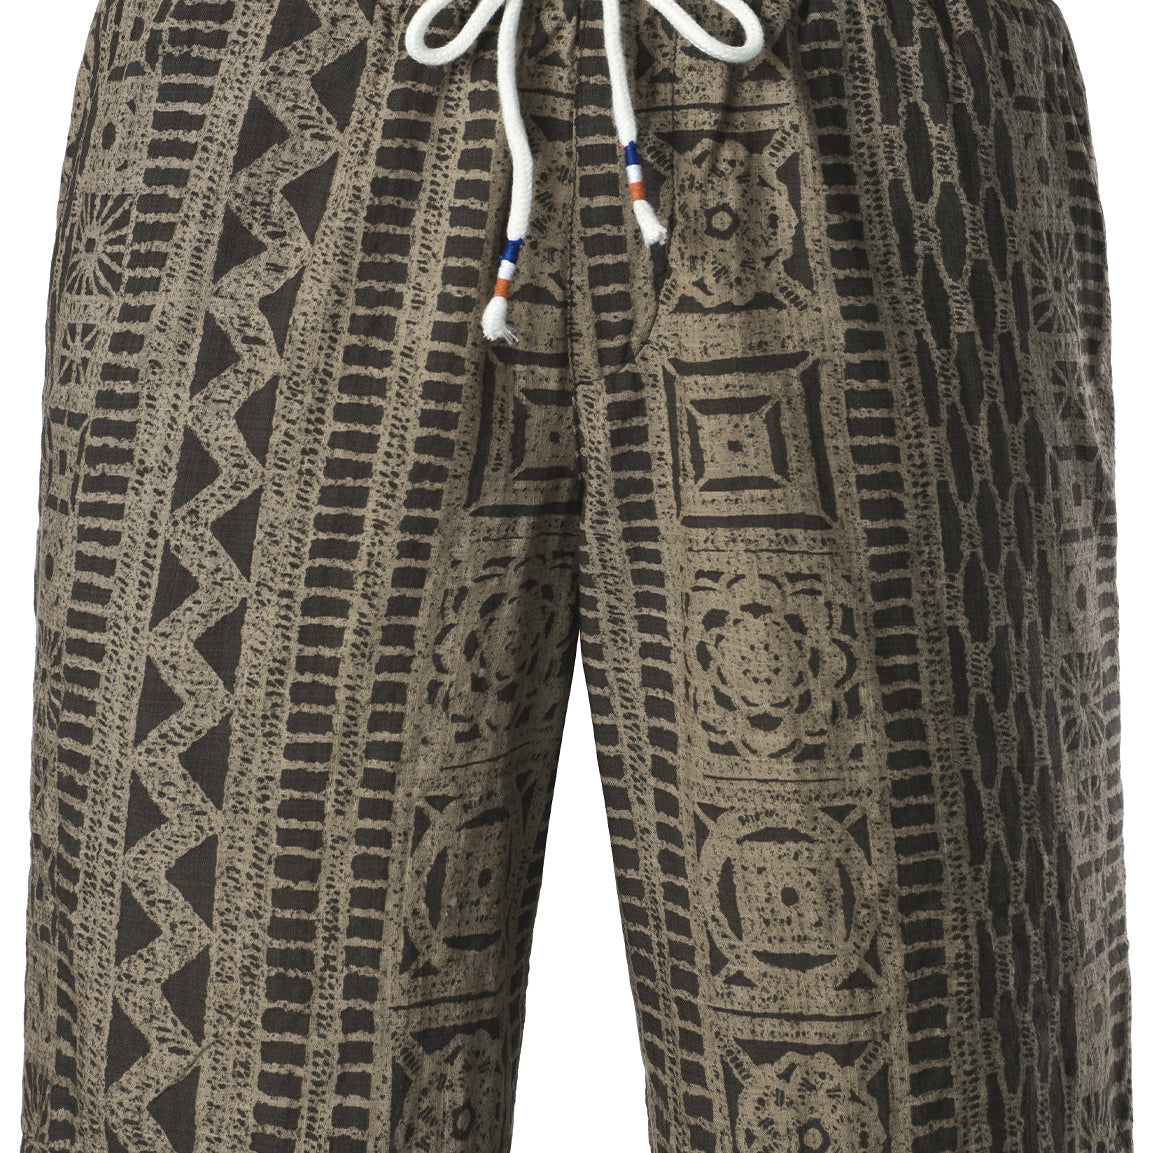 Men's Casual Vintage Boho Breathable Cotton Brown Shorts